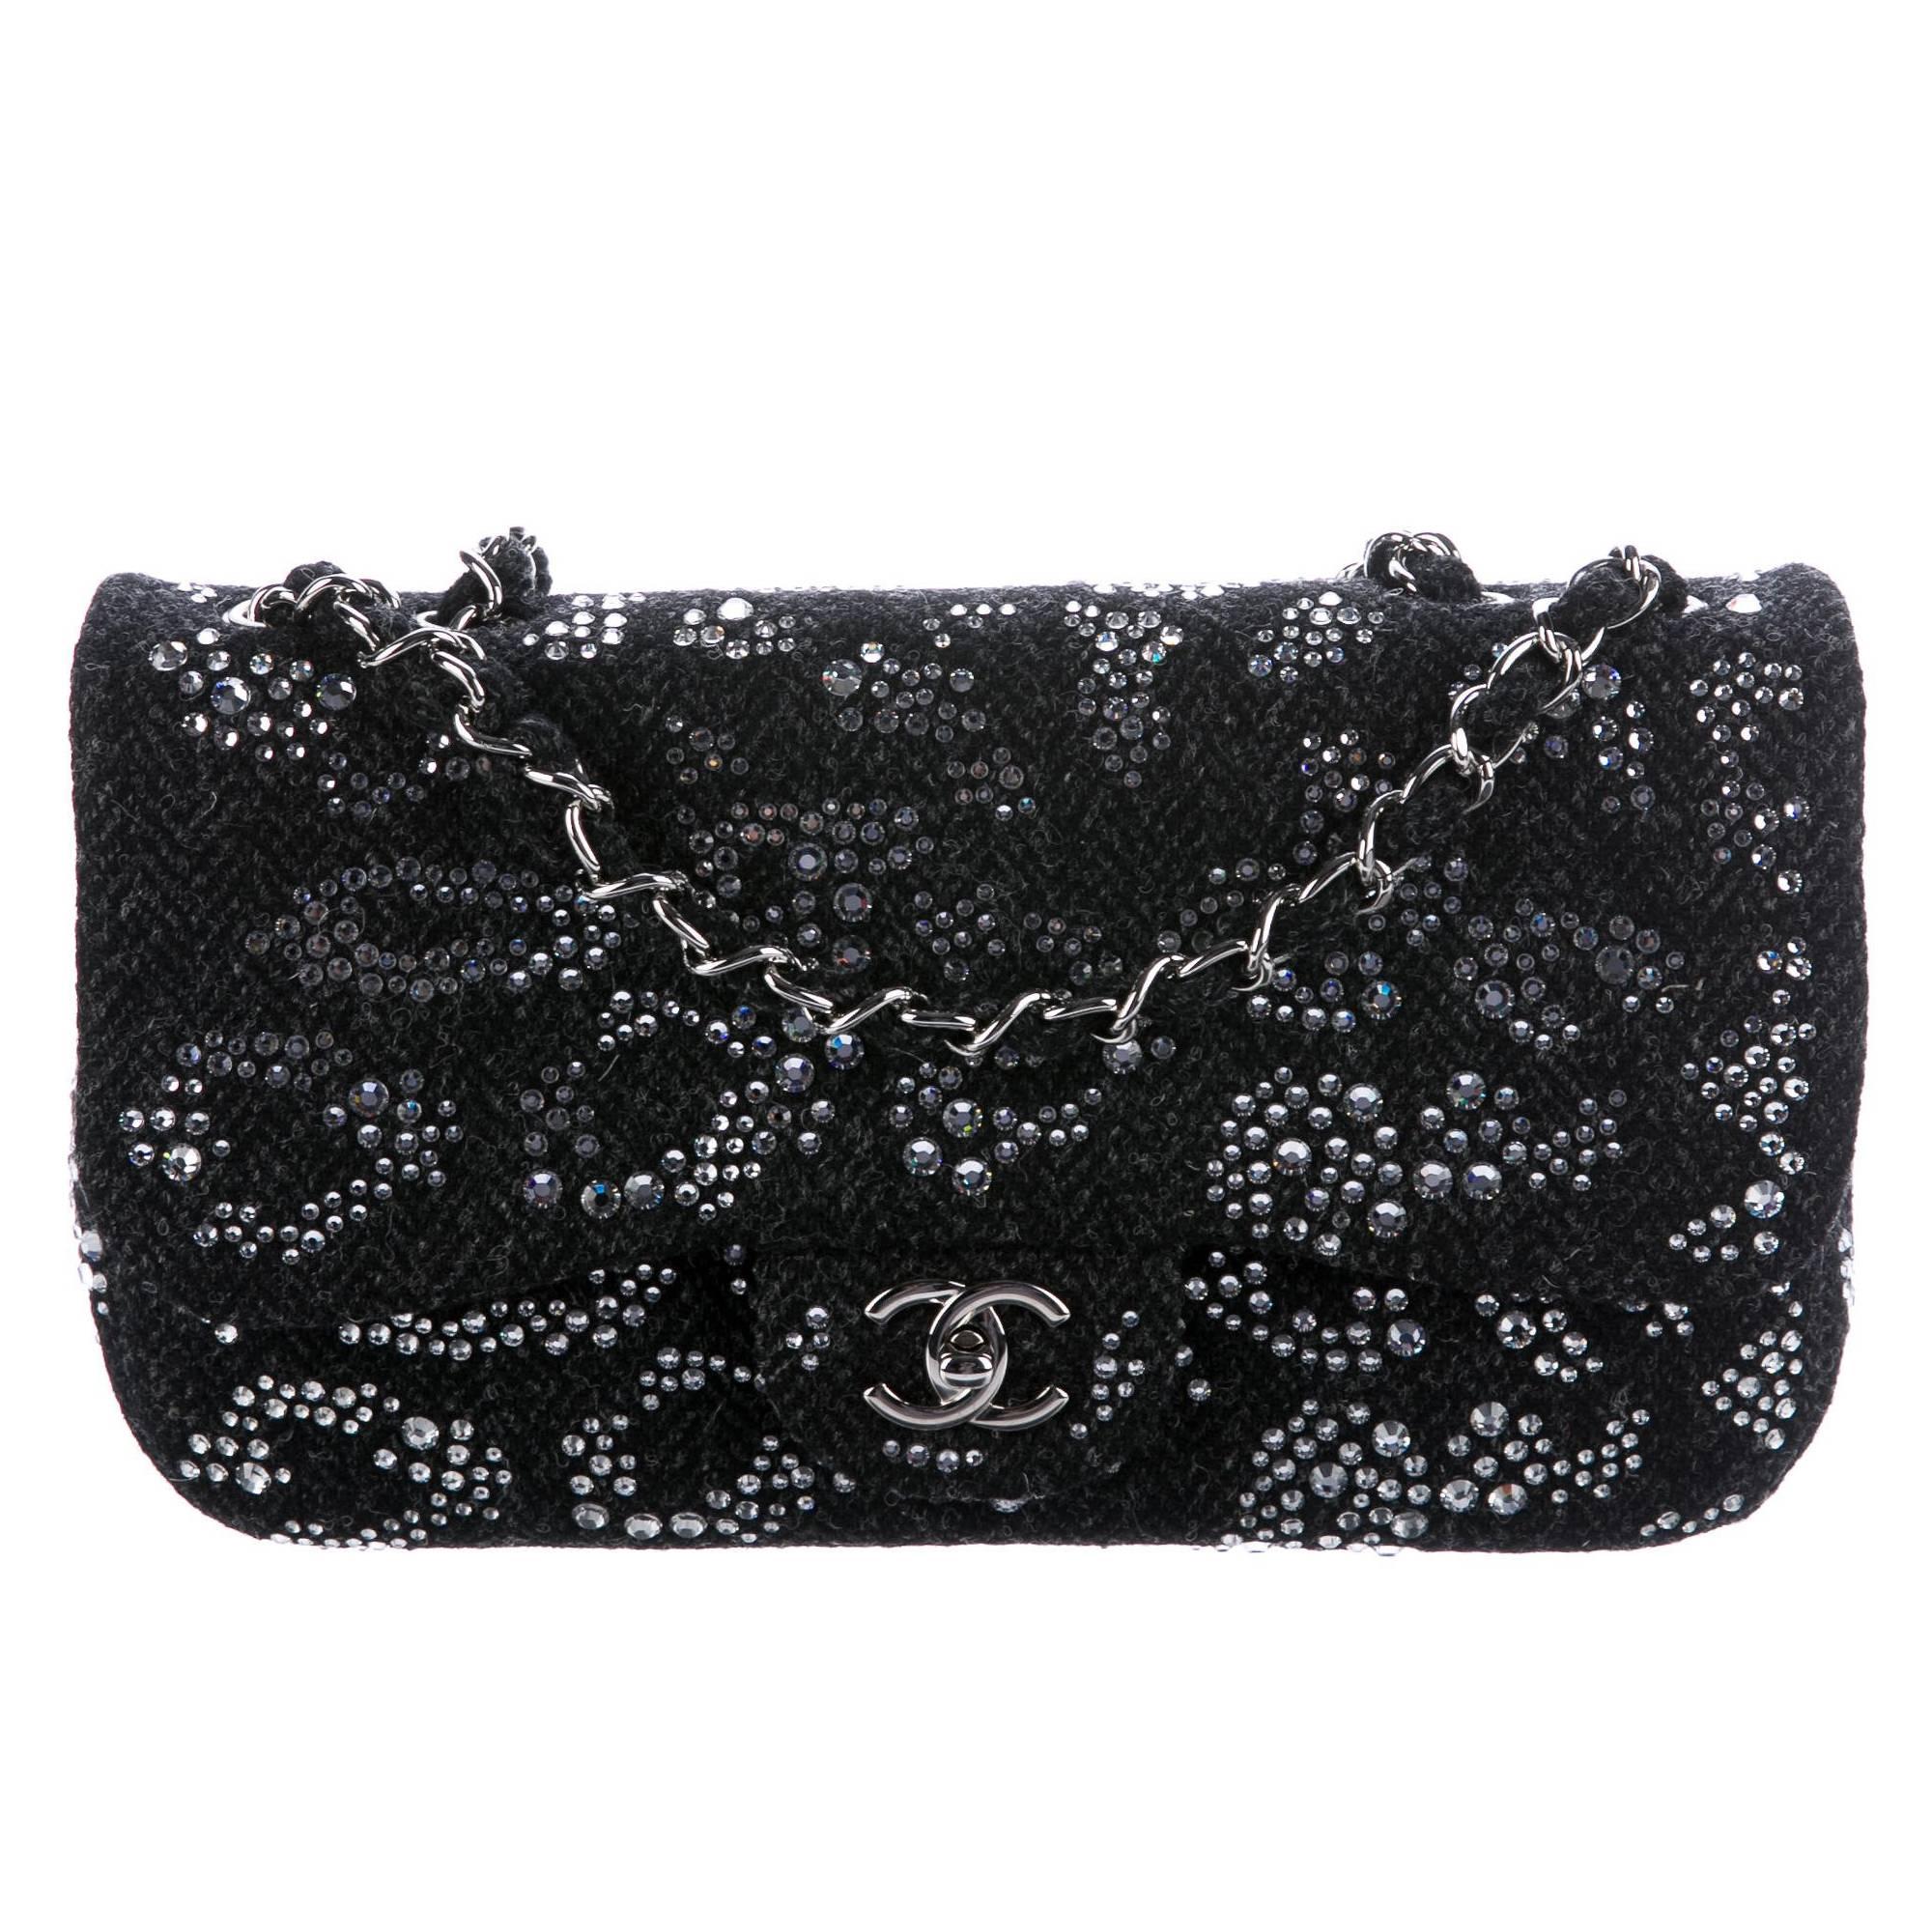 Chanel NEW Runway Swarovski Crystal Evening Shoulder Medium Flap Bag in Box